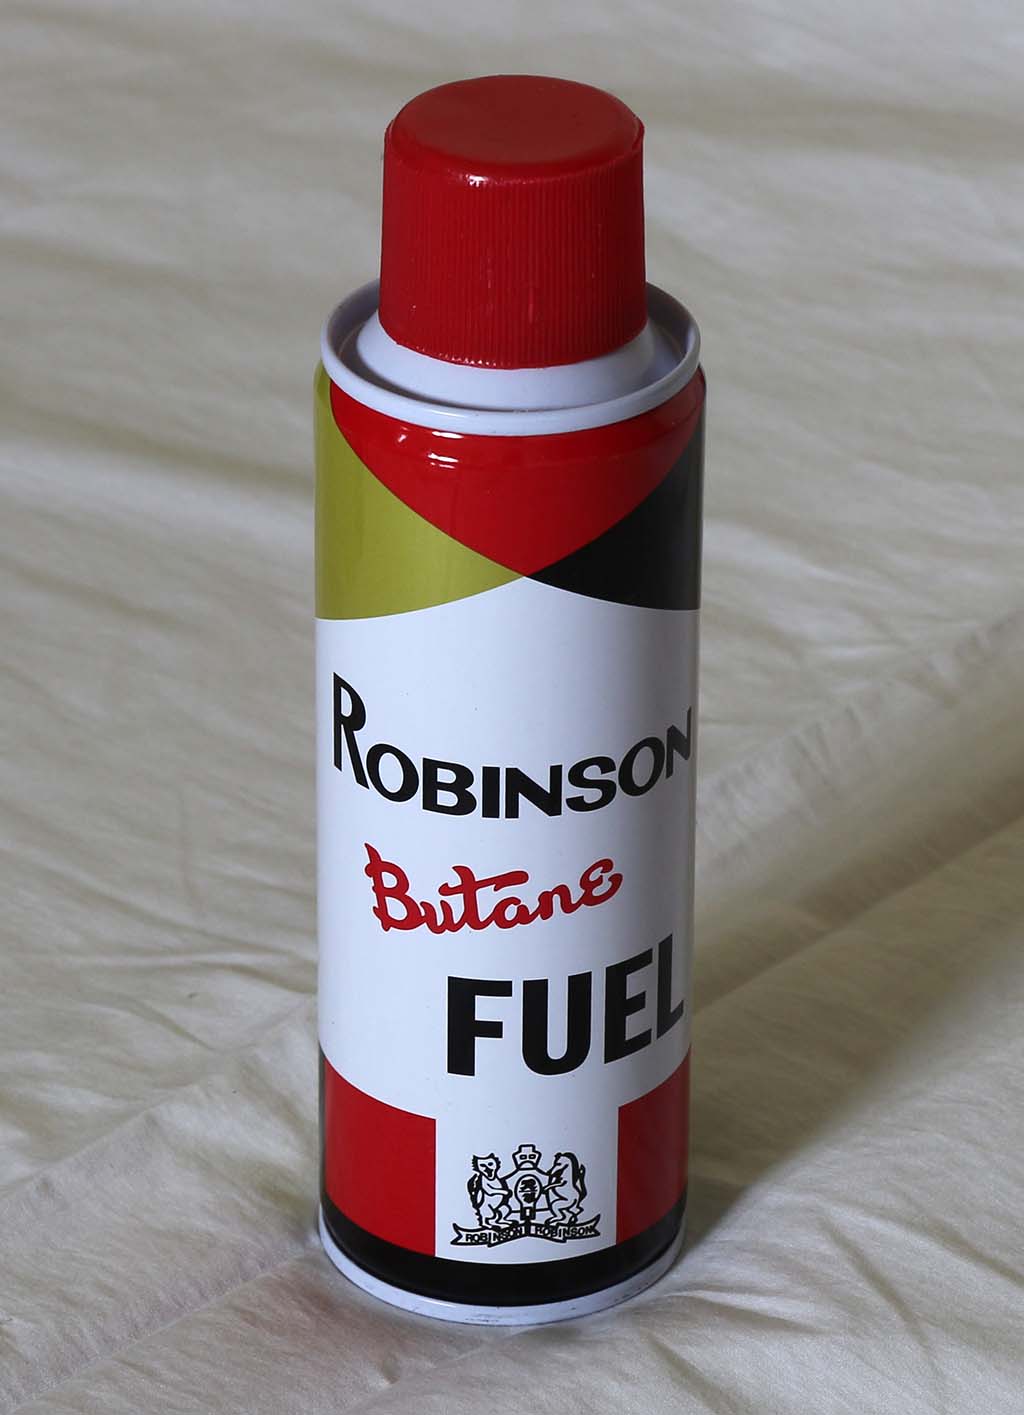 Robinson Butane Fuel